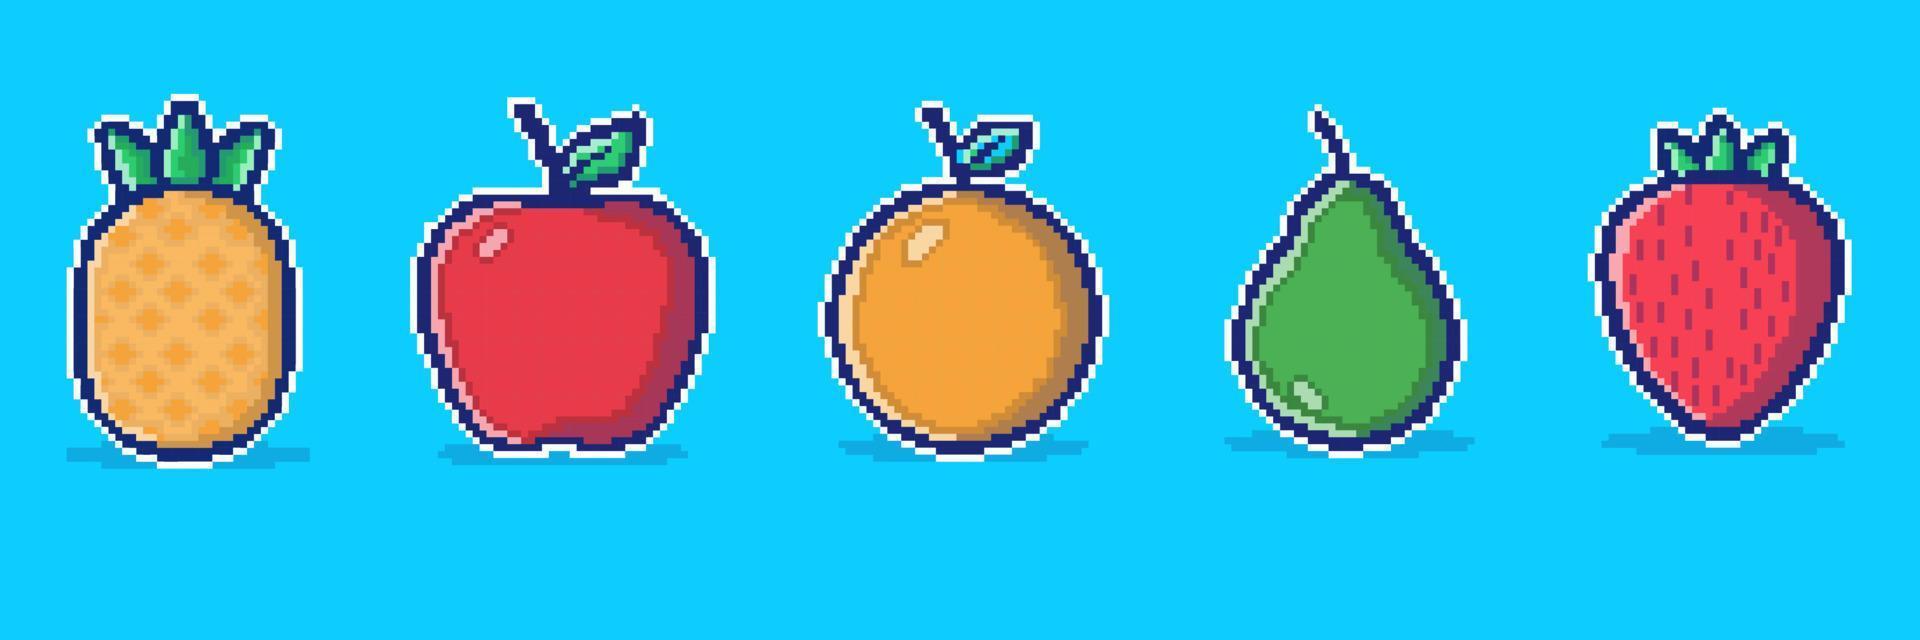 tema de arte de pixel de fruta de vector